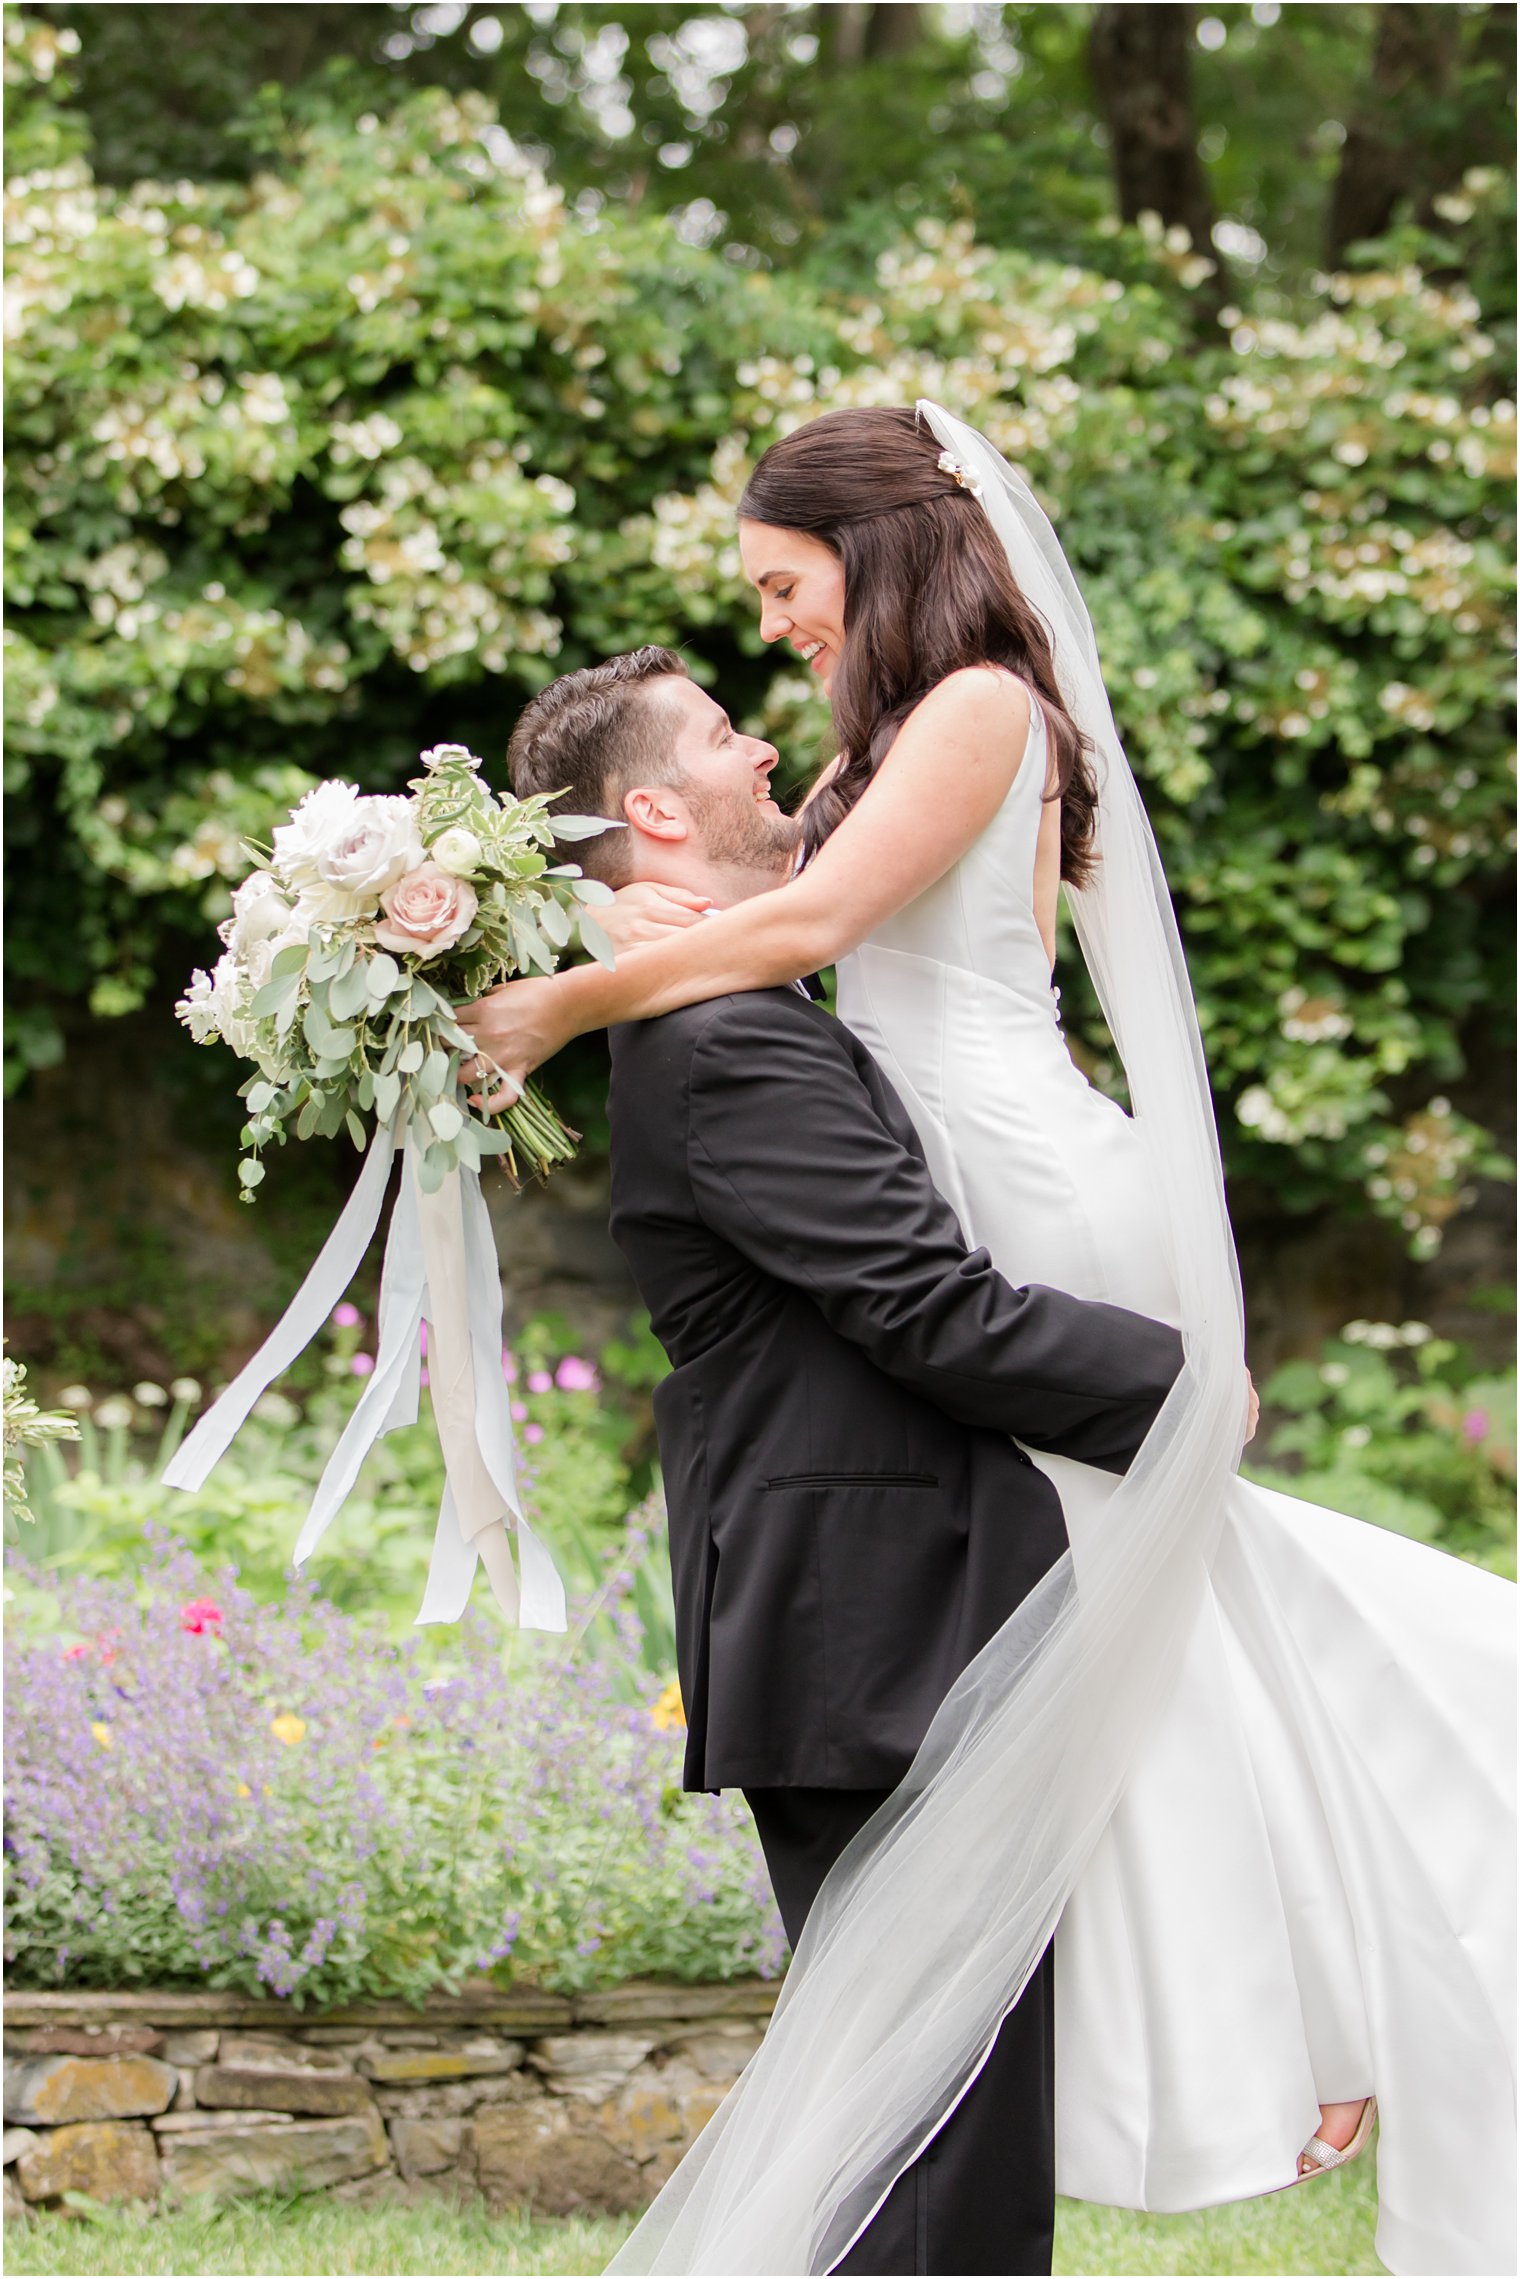 groom lifting bride during photos at Crossed Keys Estate